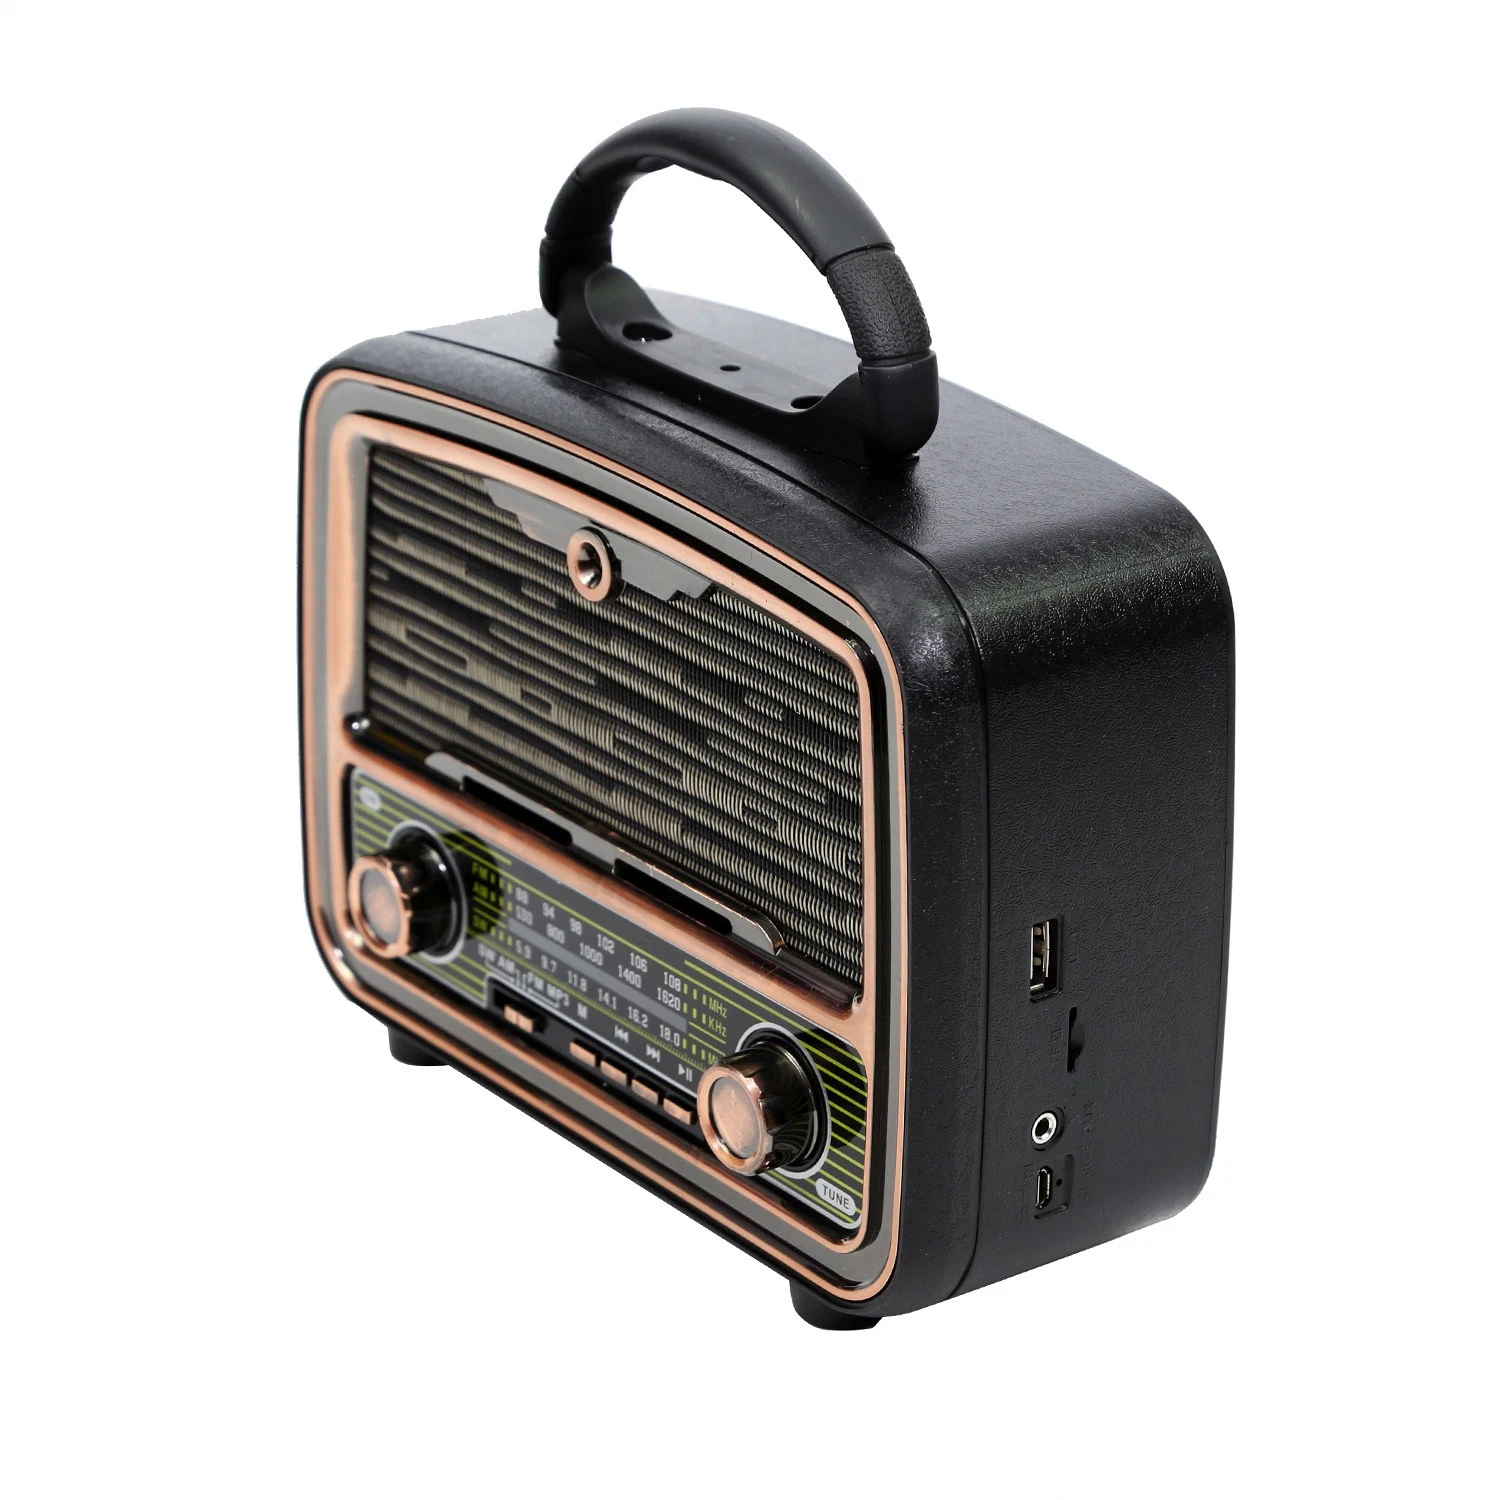 Tw305ubt نمط جديد للبيع الساخن FM/Am/Sw 3 فئات راديو محمول بلوتوث/USB/TF وظائف